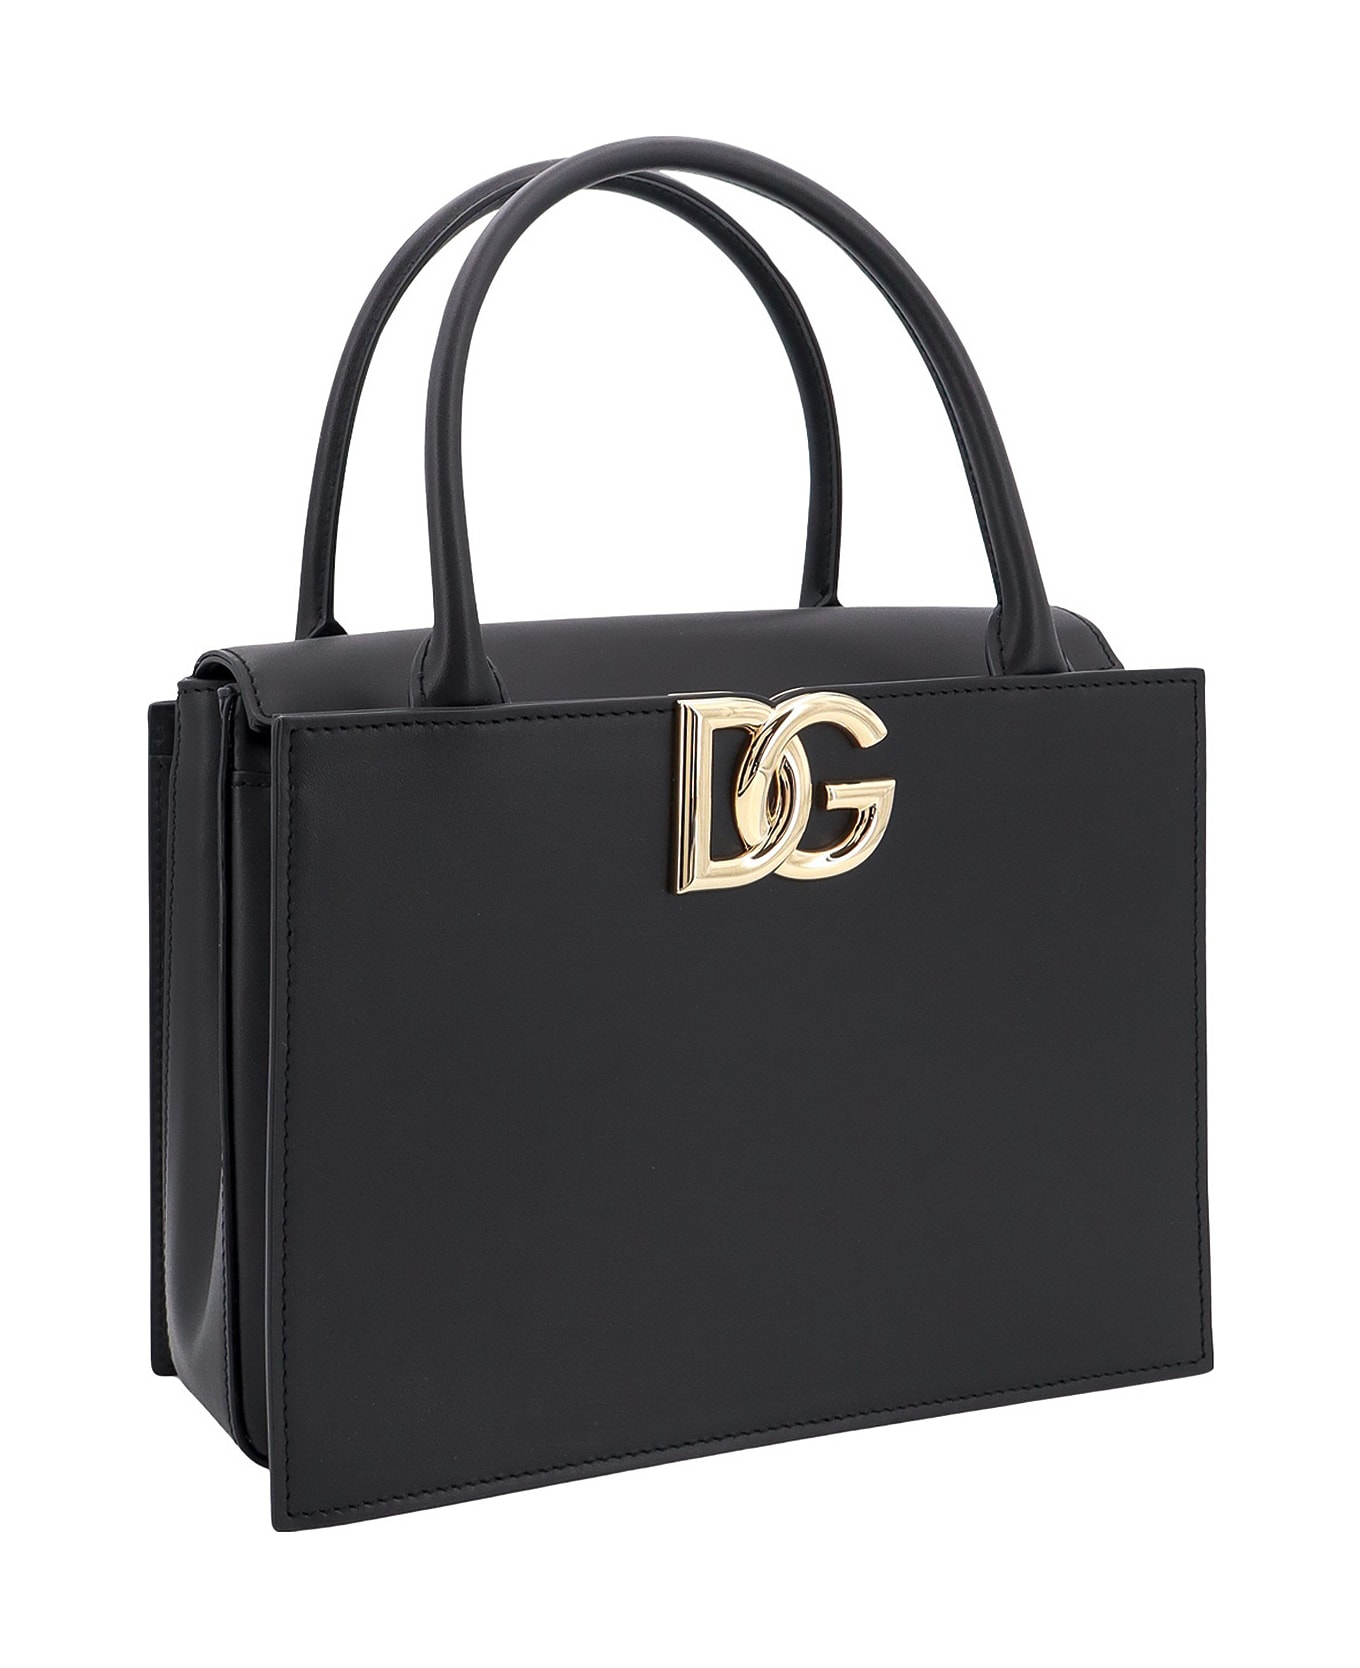 Dolce & Gabbana Handbag - Black